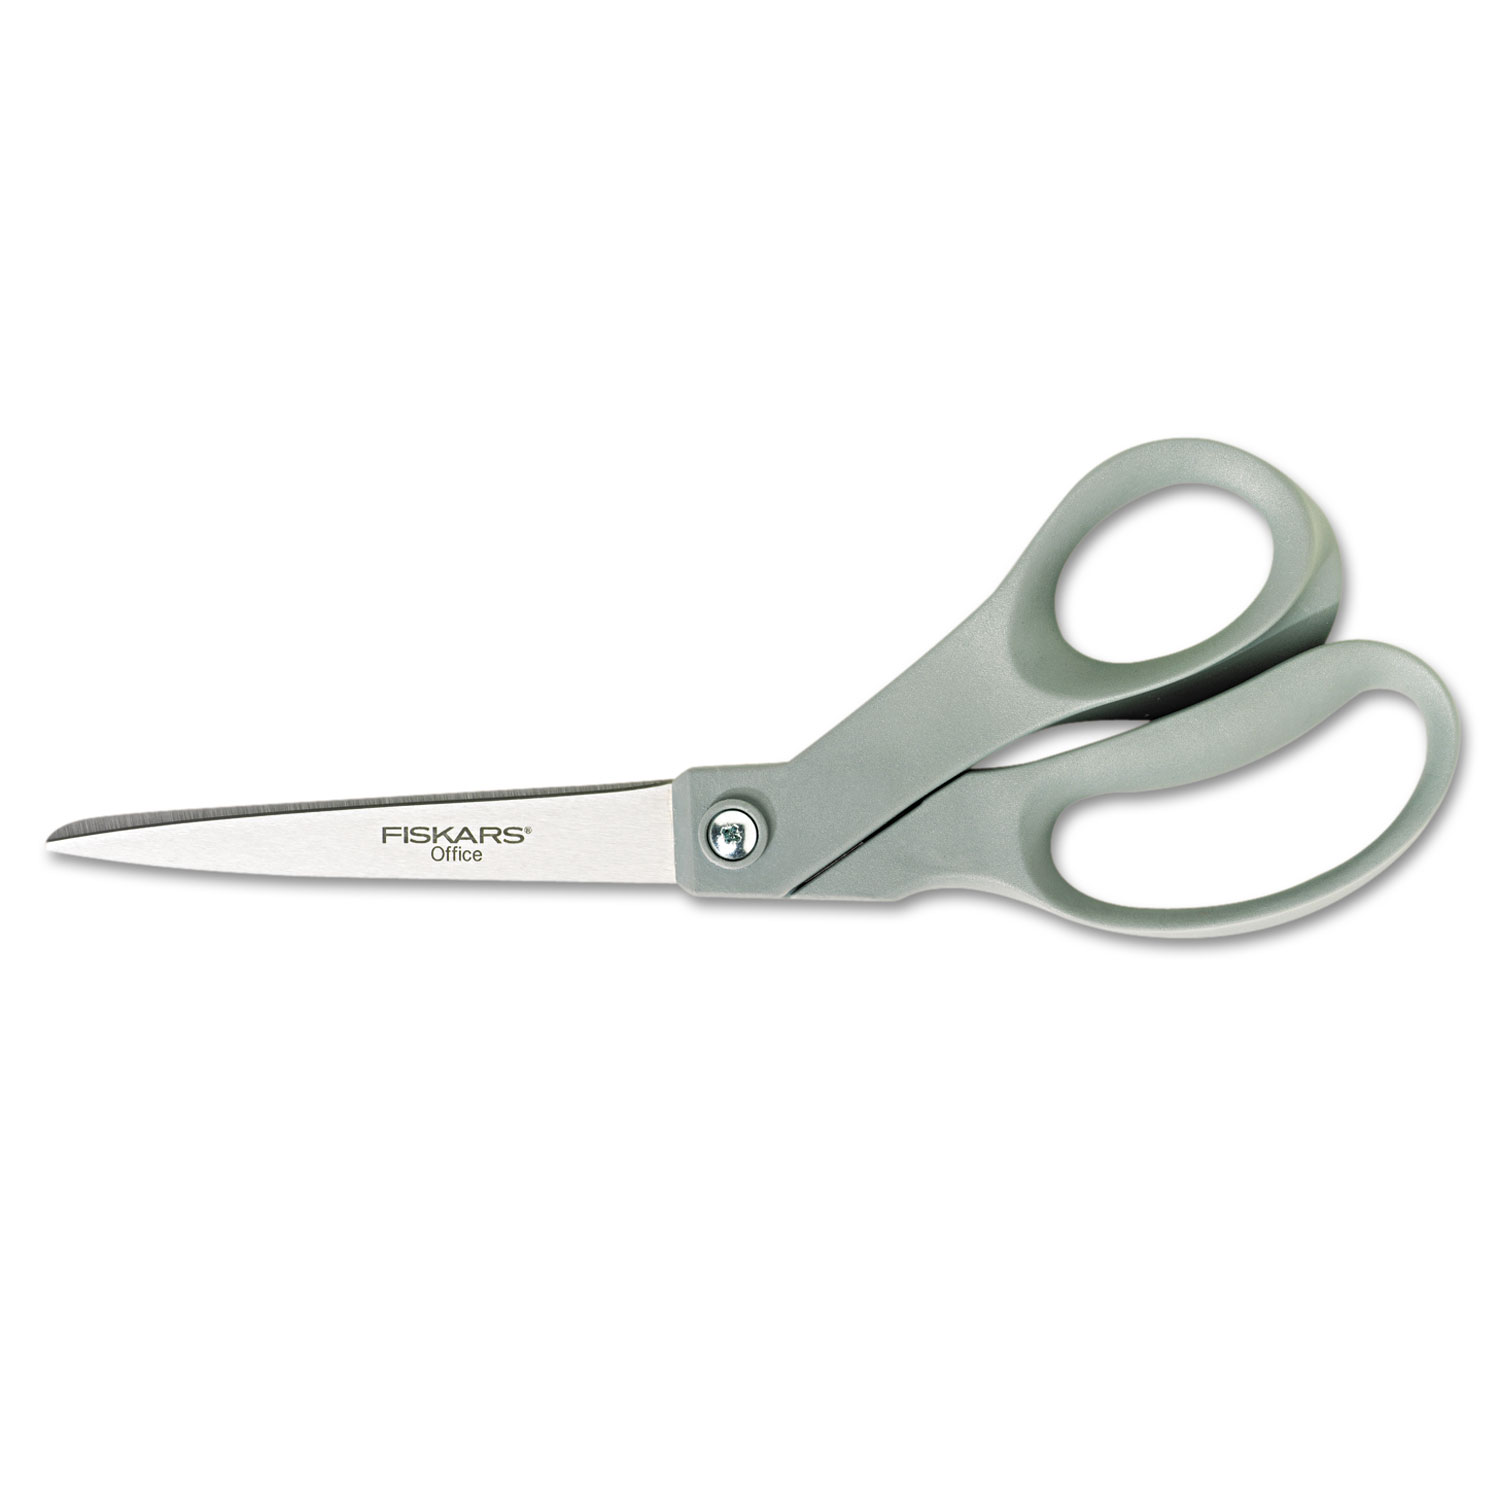  Fiskars 01-004250 Contoured Performance Scissors, 8 Long, 3.5 Cut Length, Gray Offset Handle (FSK01004250J) 